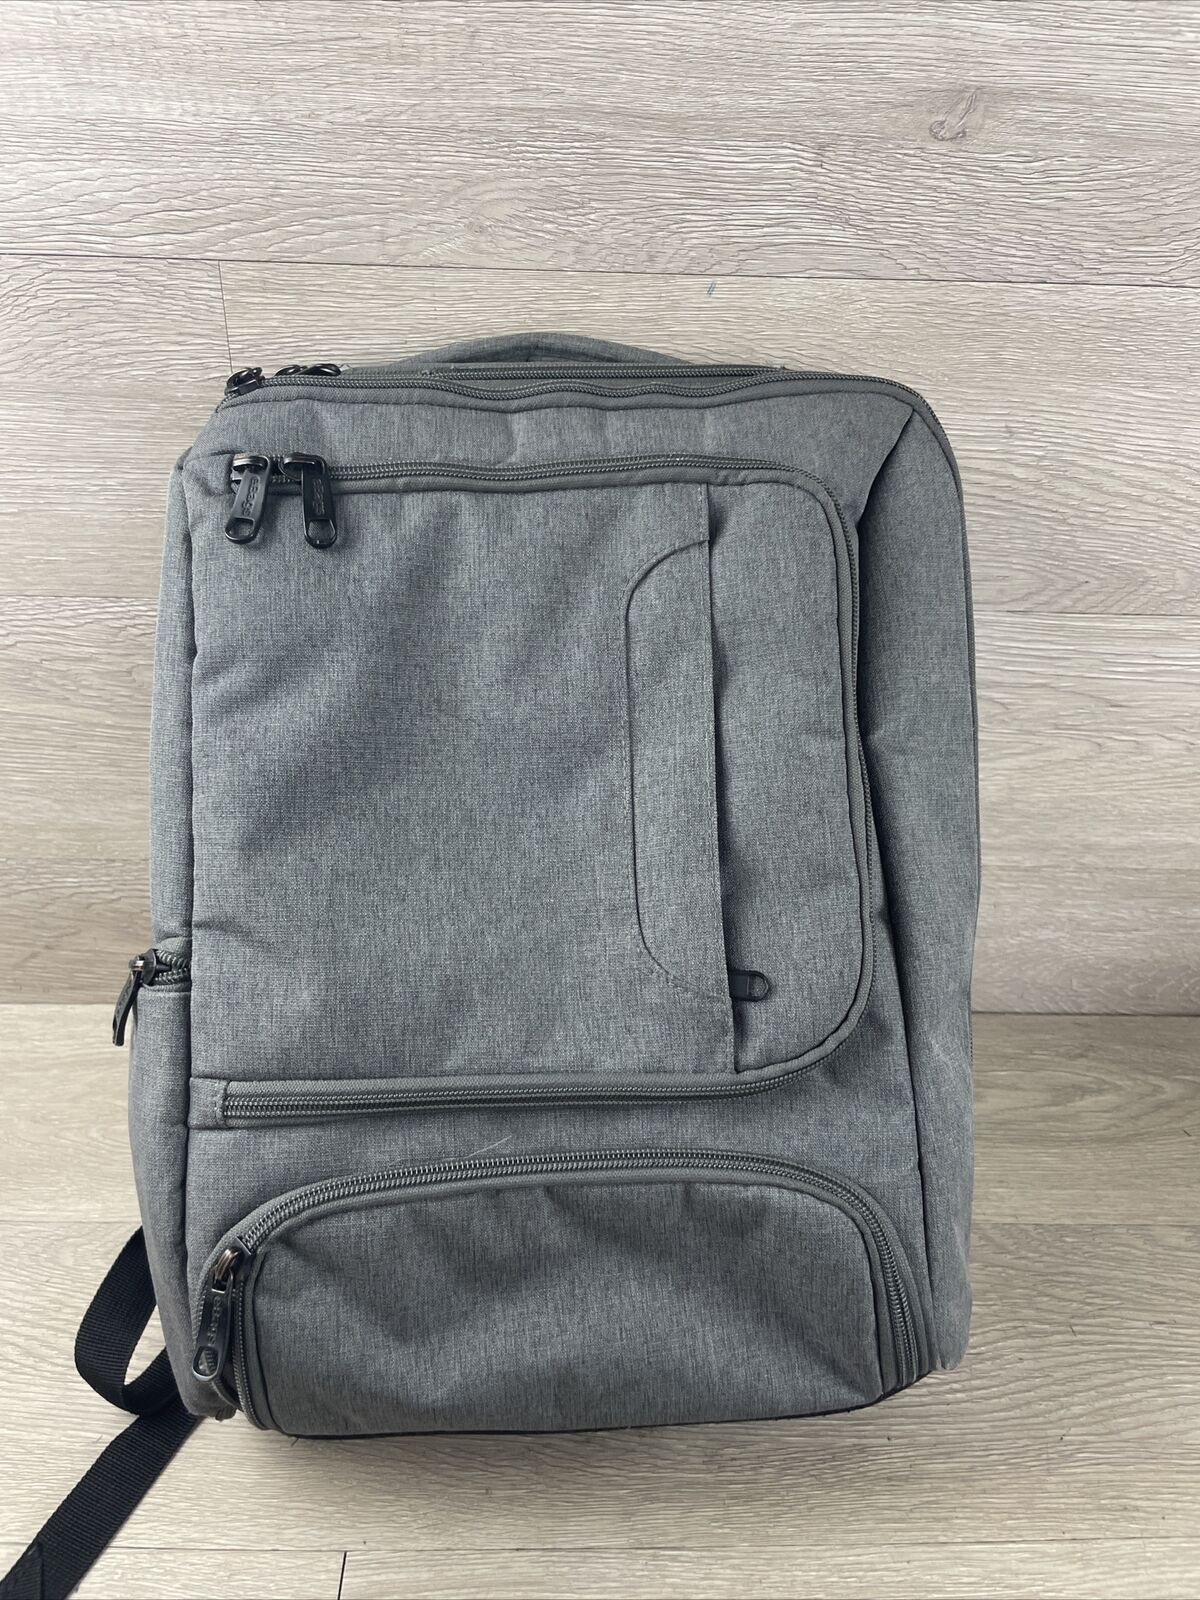 eBags Pro Slim Weekender Gray Backpack Luggage Travel Laptop Bag Carry-on